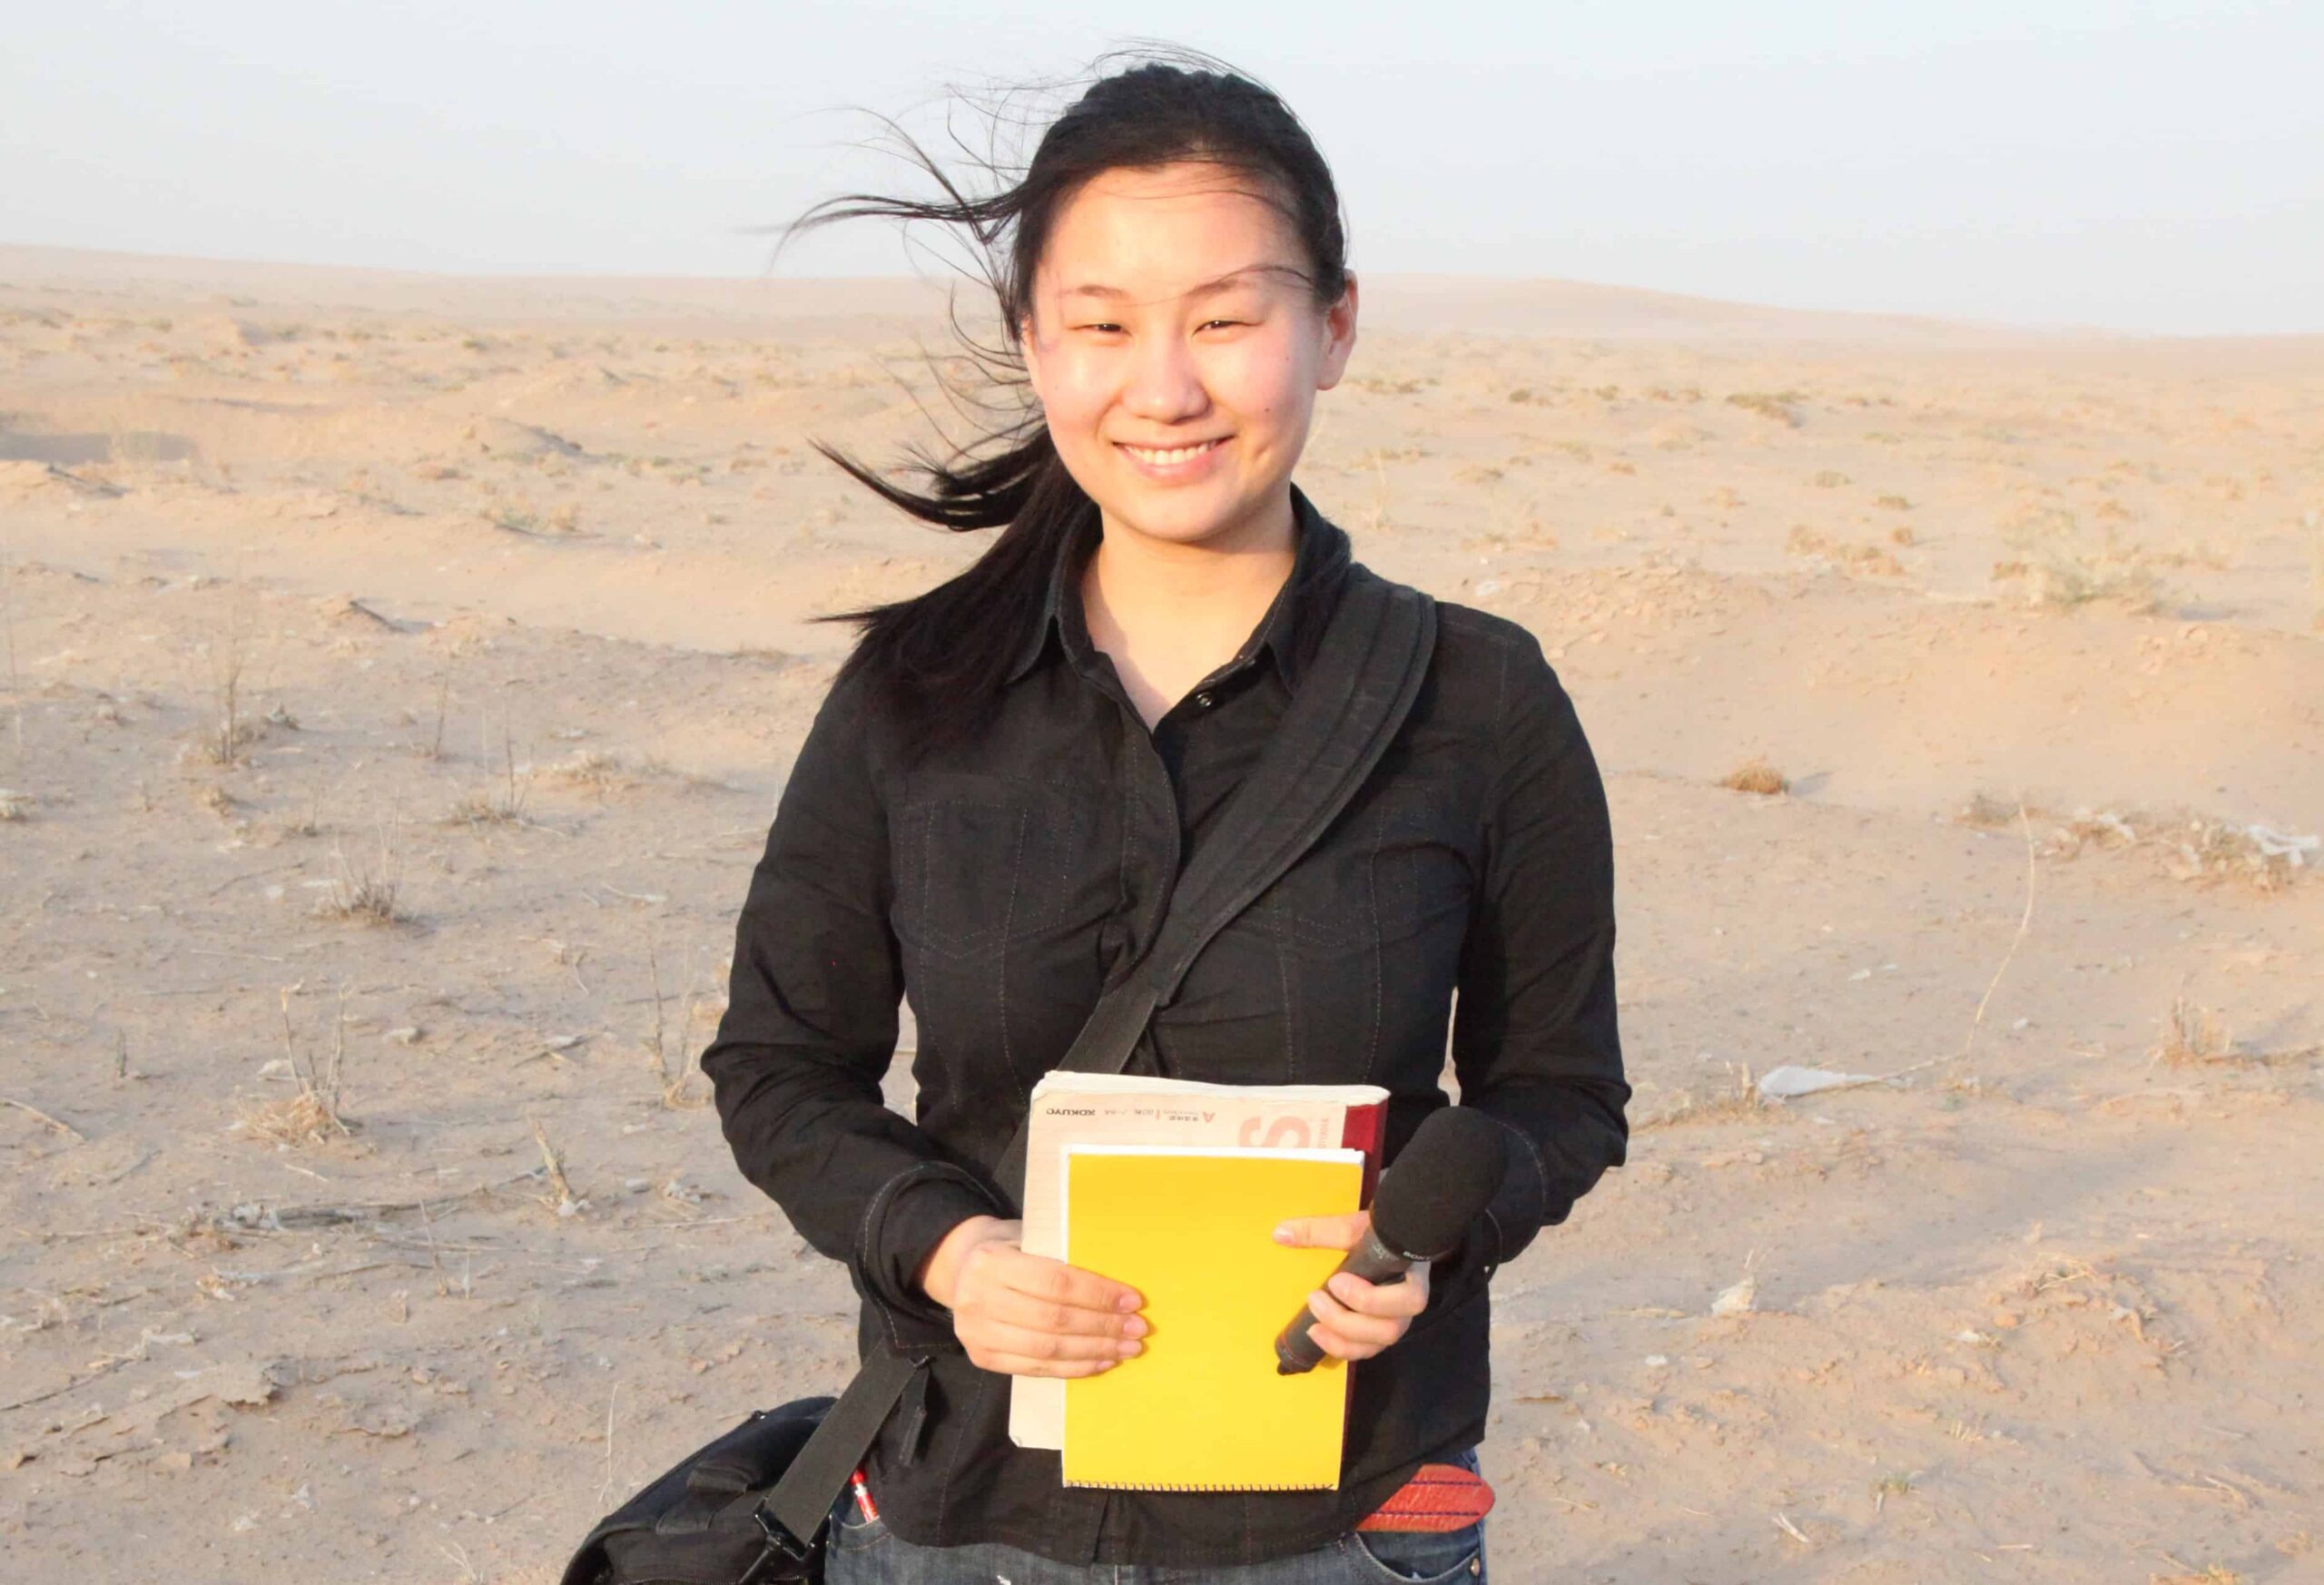 Cui Zheng stands in the desert holding a notebook